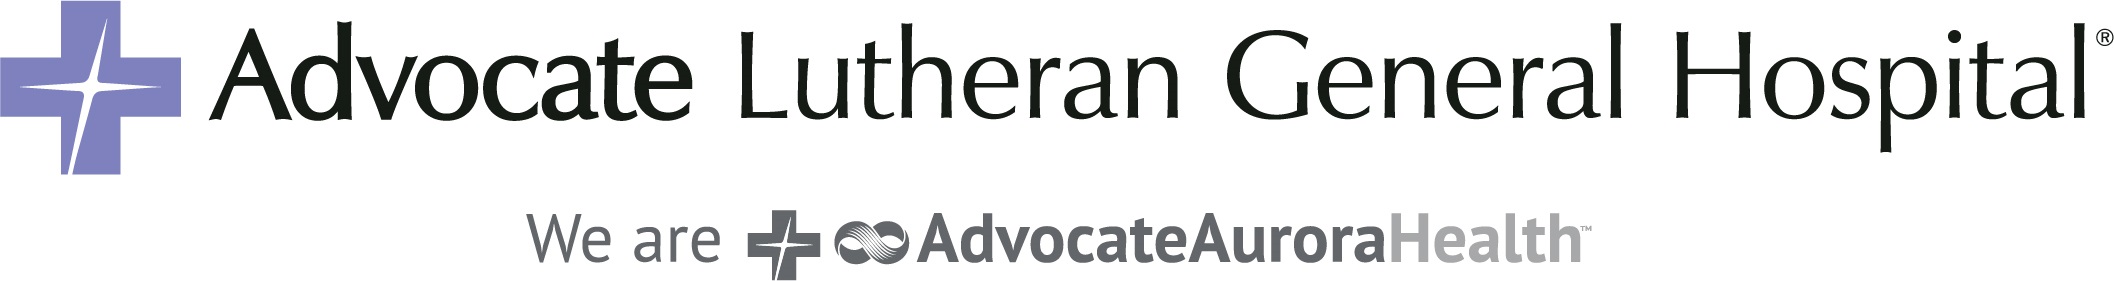 Advocate Lutheran General Hospital Logo